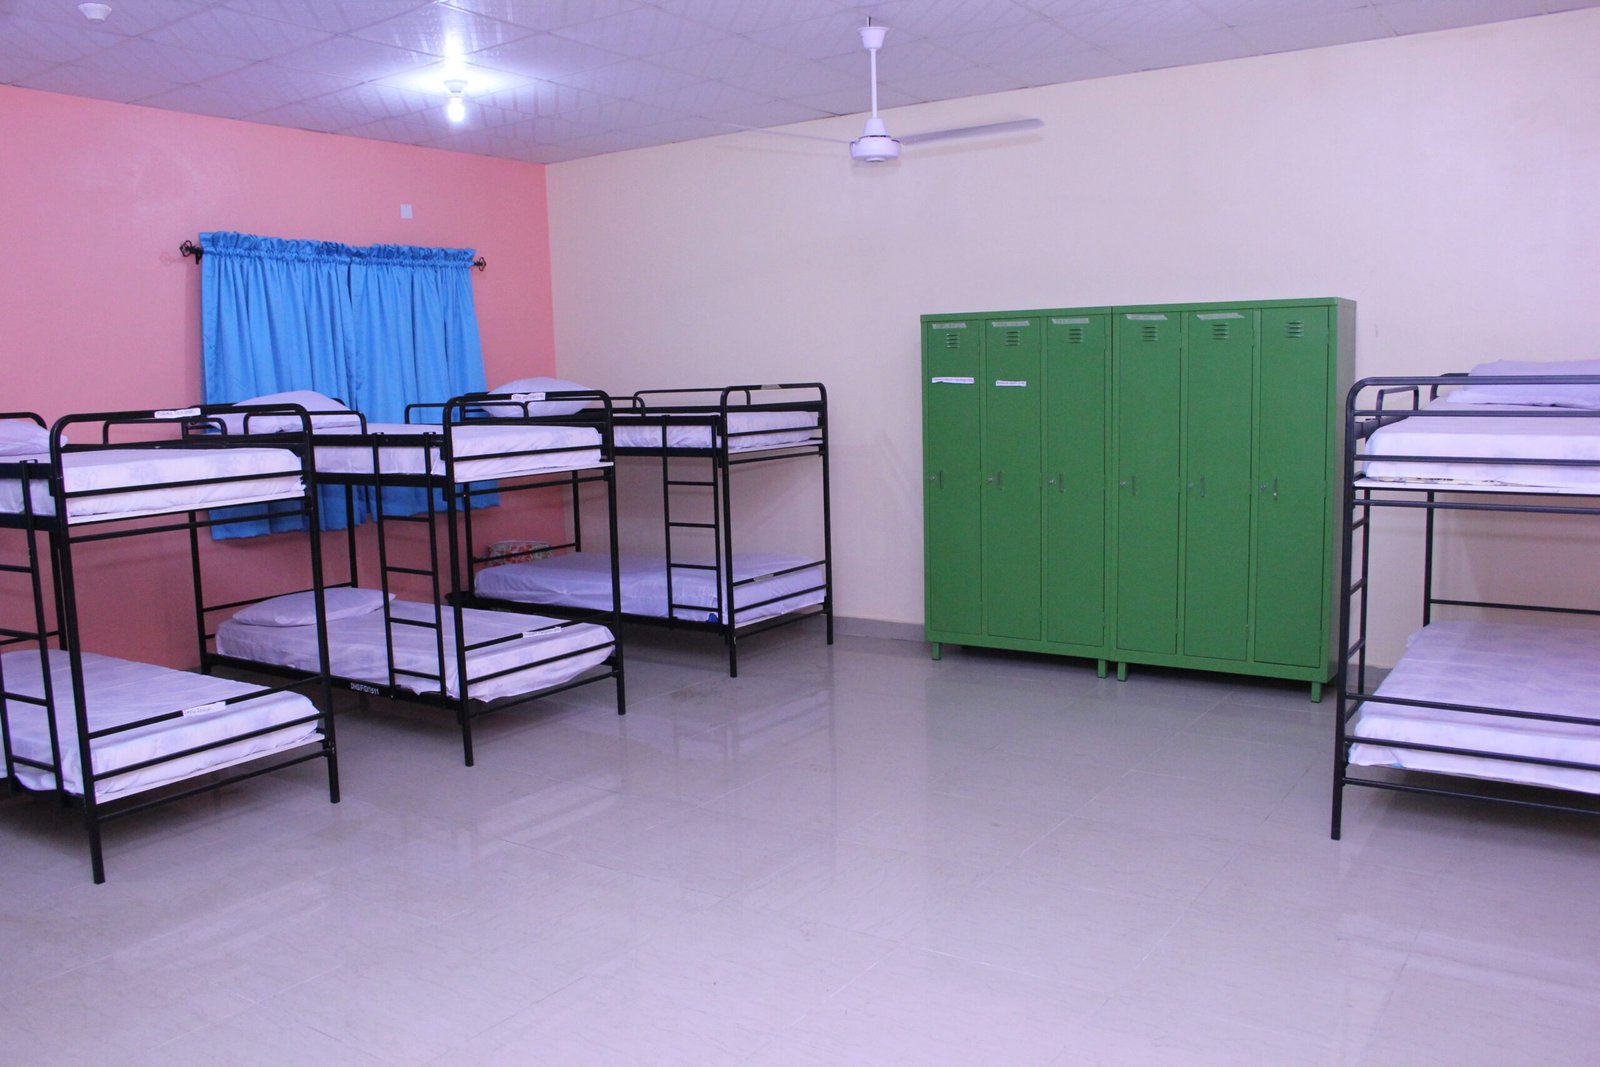 School hostel